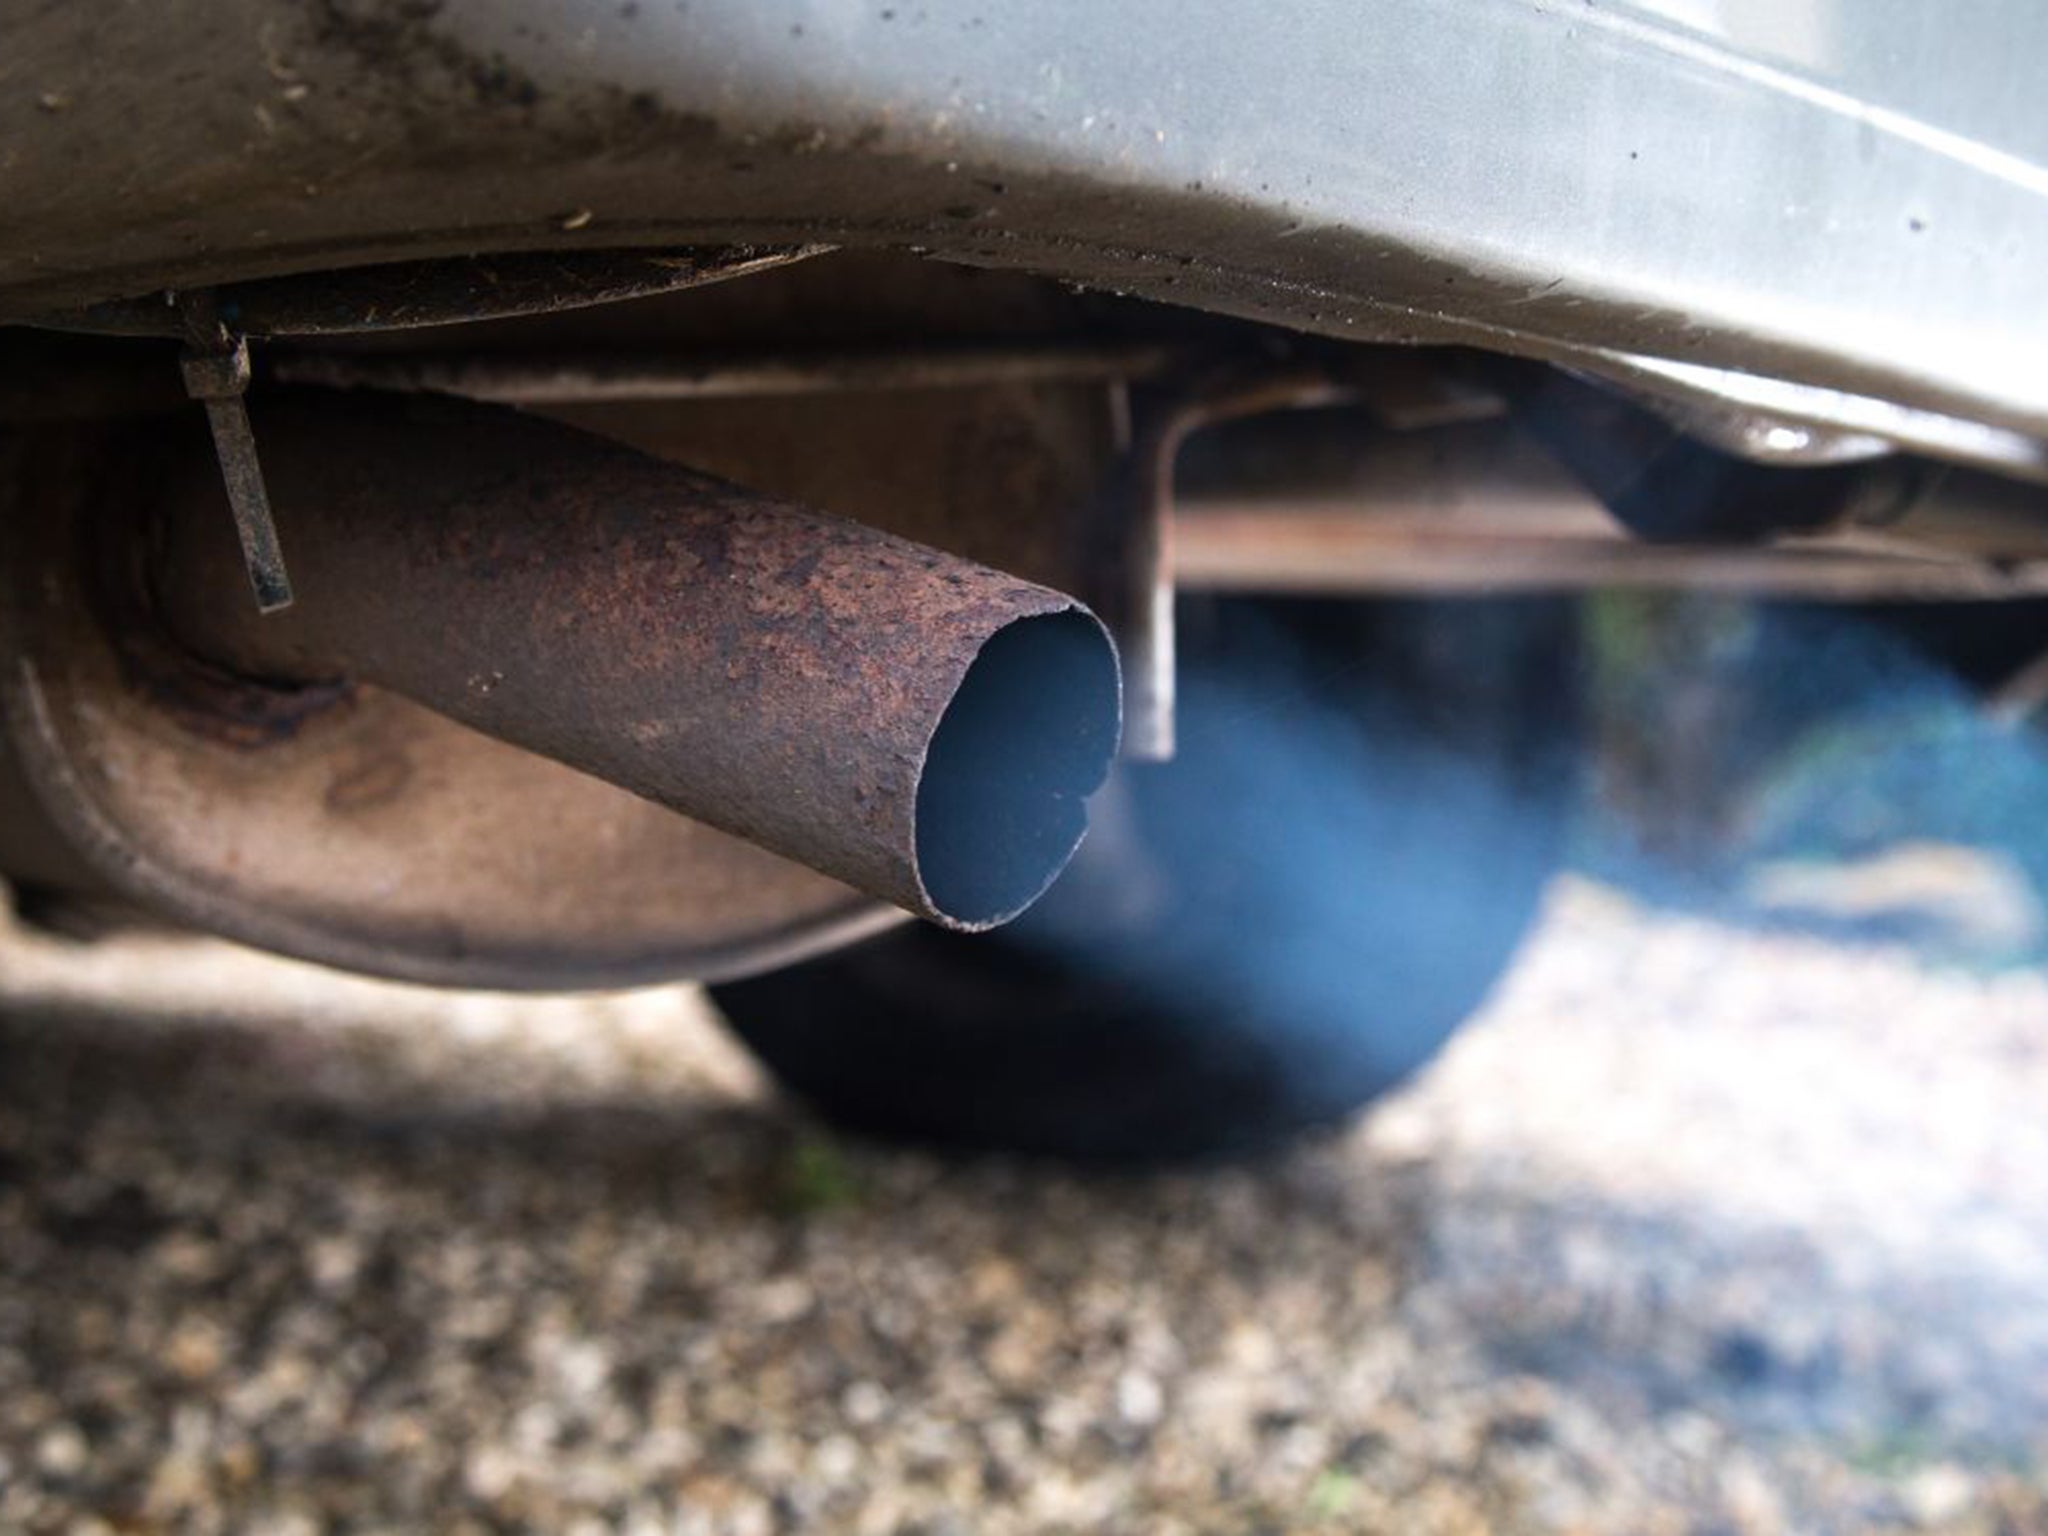 Car emissions produce fine pollution particles